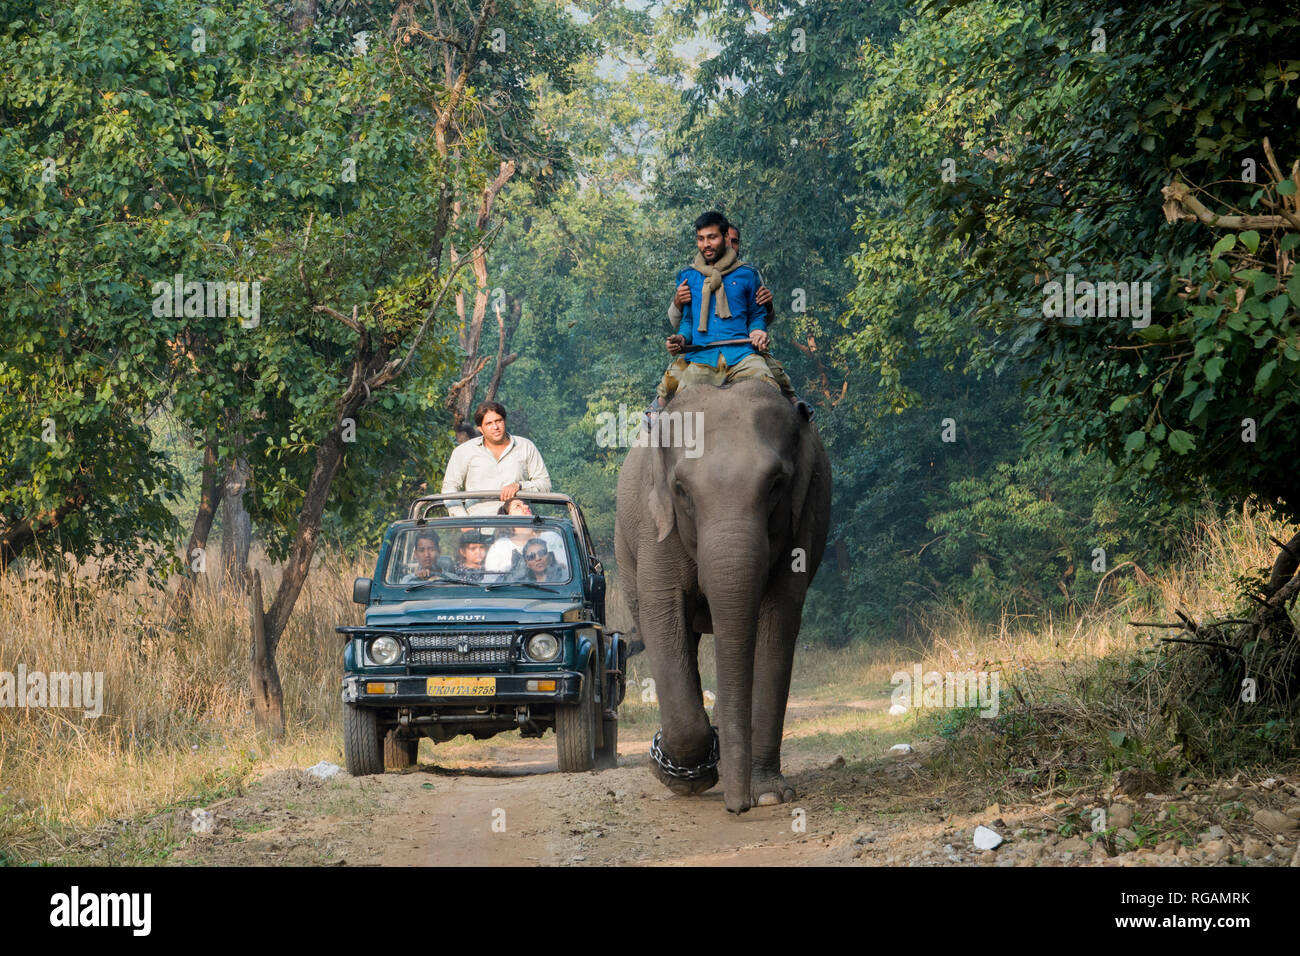 Safari jeep passing mahouts riding elephant in Rajaji National Park, Uttarakhand, Inda Stock Photo